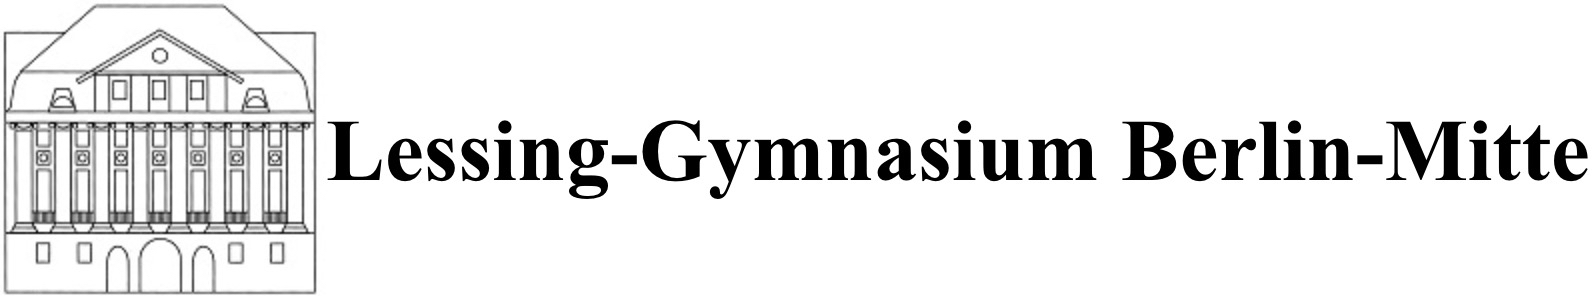 Lessing-Gymnasium Berlin logo